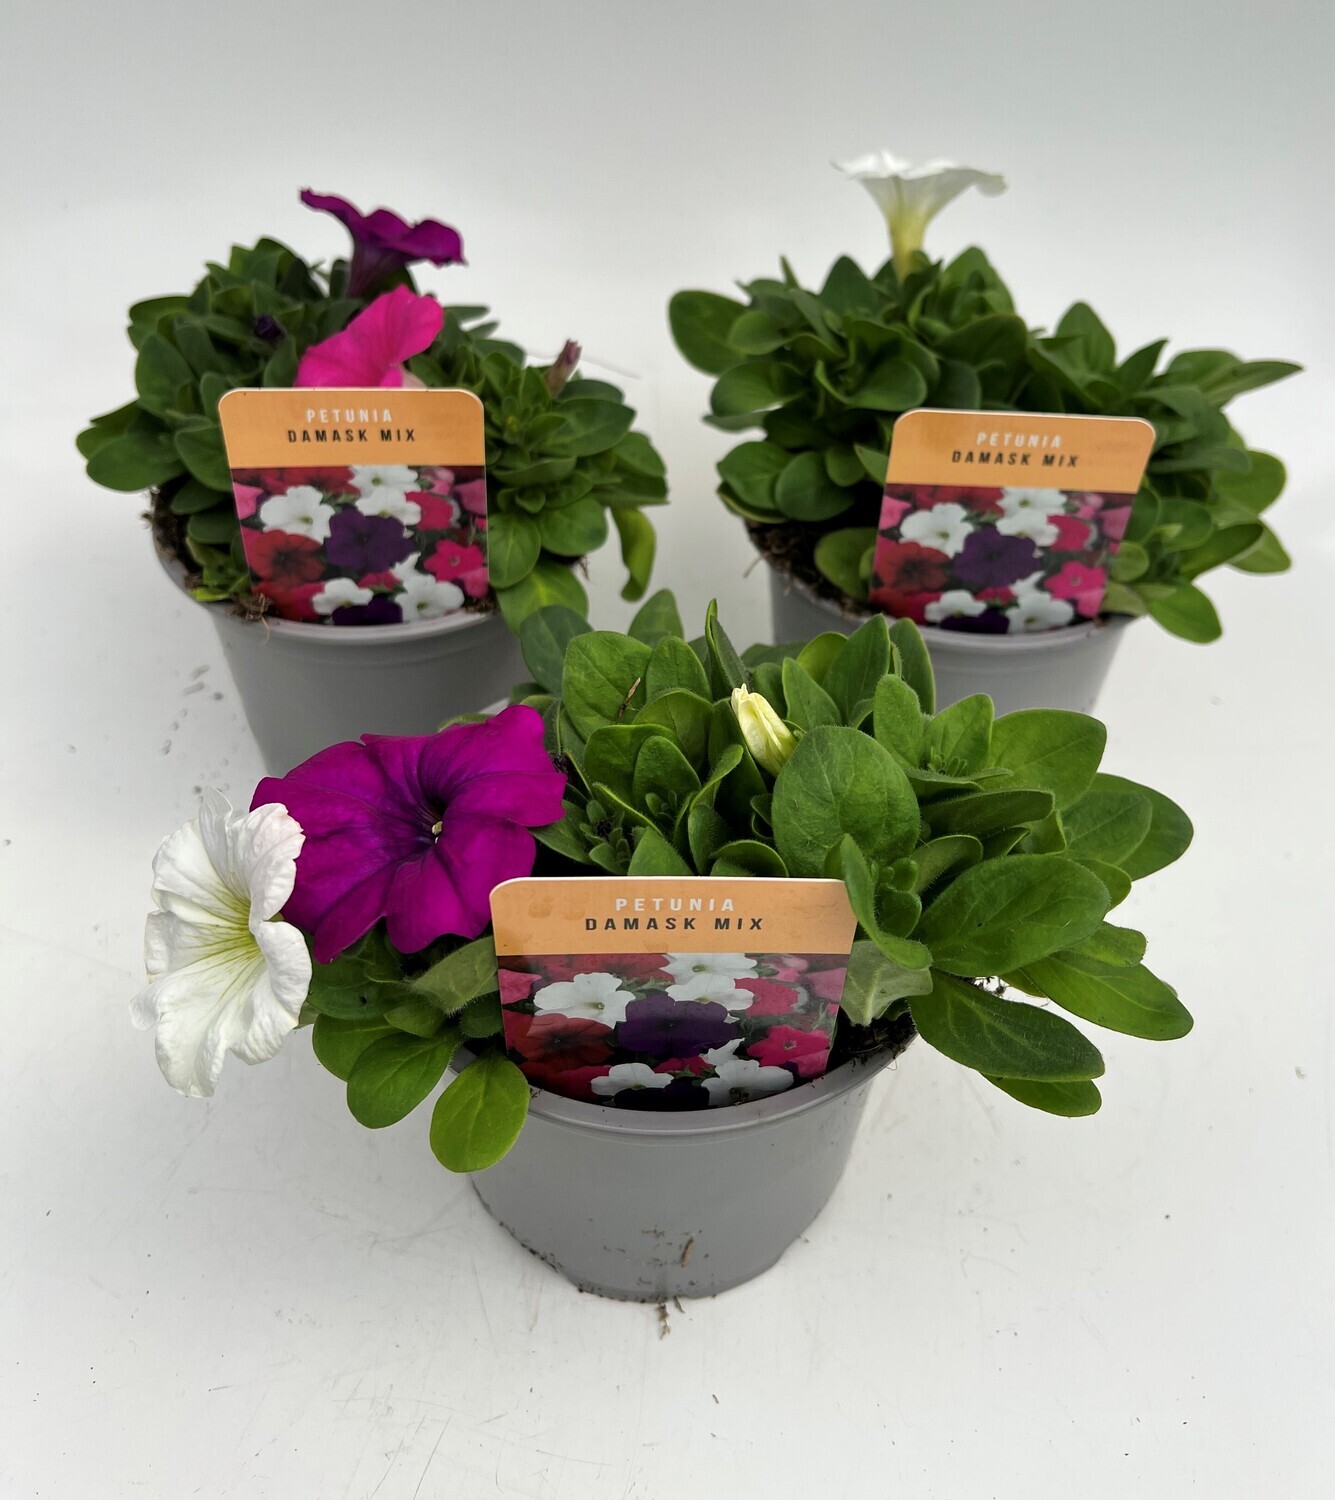 x2 Petunia Damask Mix - Plants 13cm/1 Ltr pots  - COLOURFUL GARDEN READY